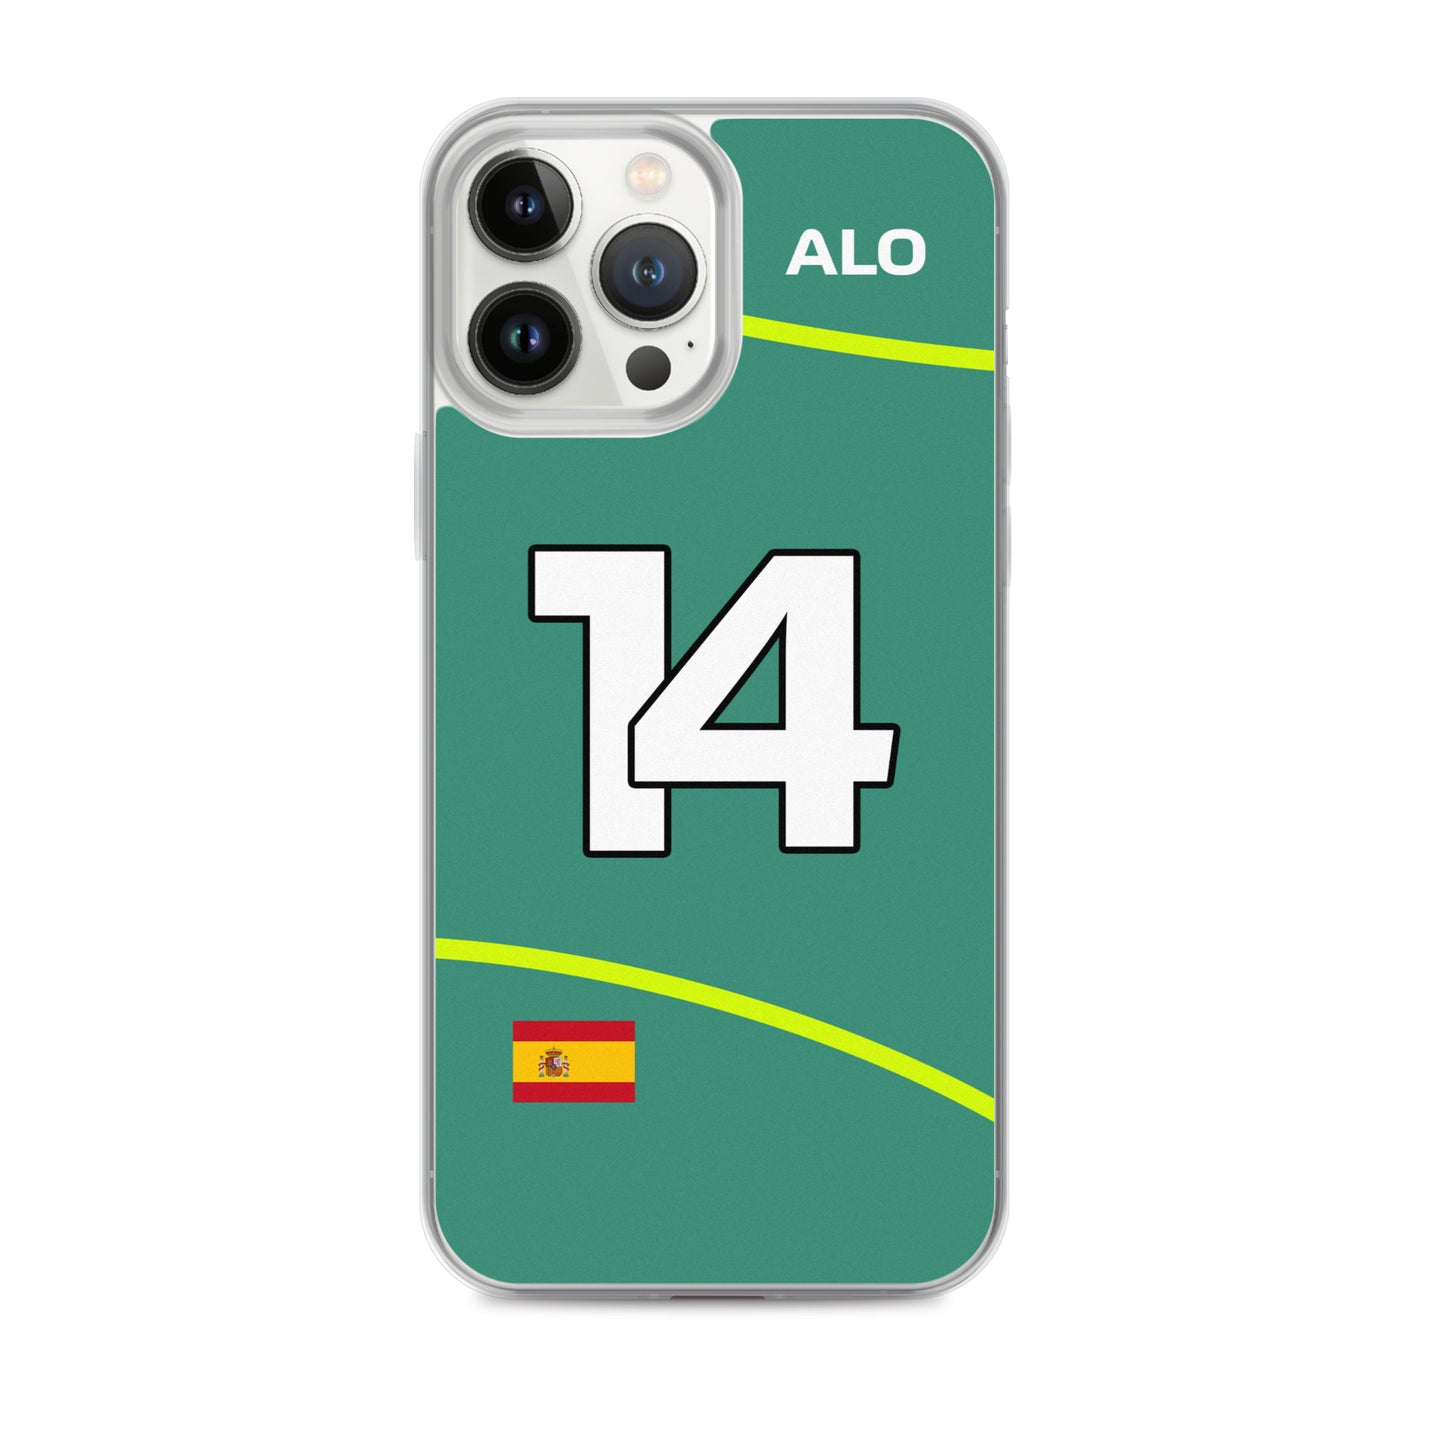 Fernando Alonso Aston Martin iPhone Case 13 pro max